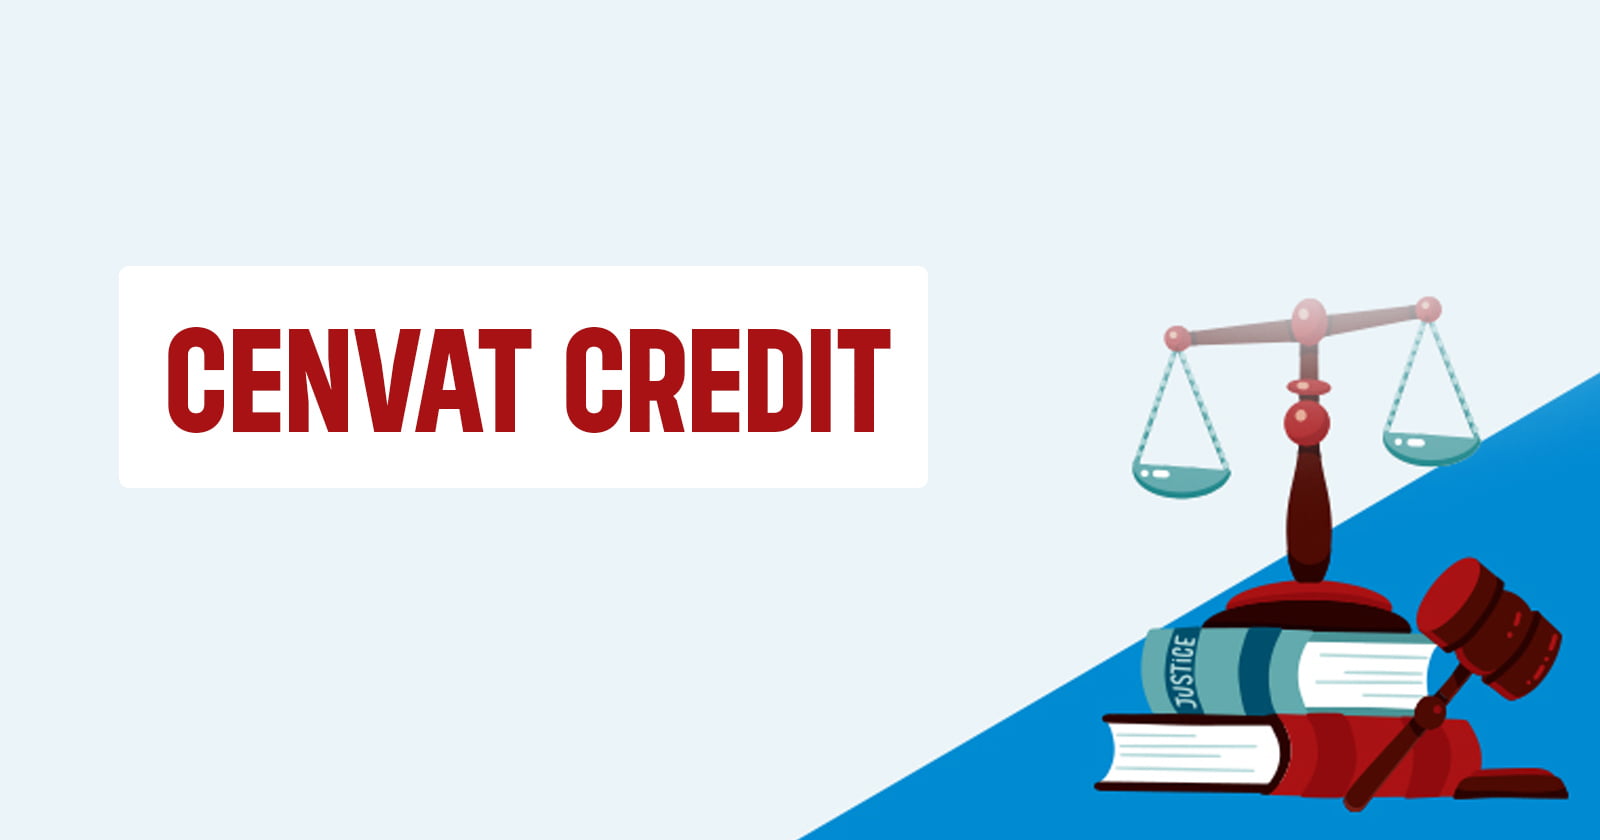 CENVAT Credit - Service Tax Credit - Service Tax - Tax Credit - Tax - Automotive Dealers - CESTAT - Customs - Excise - Taxscan